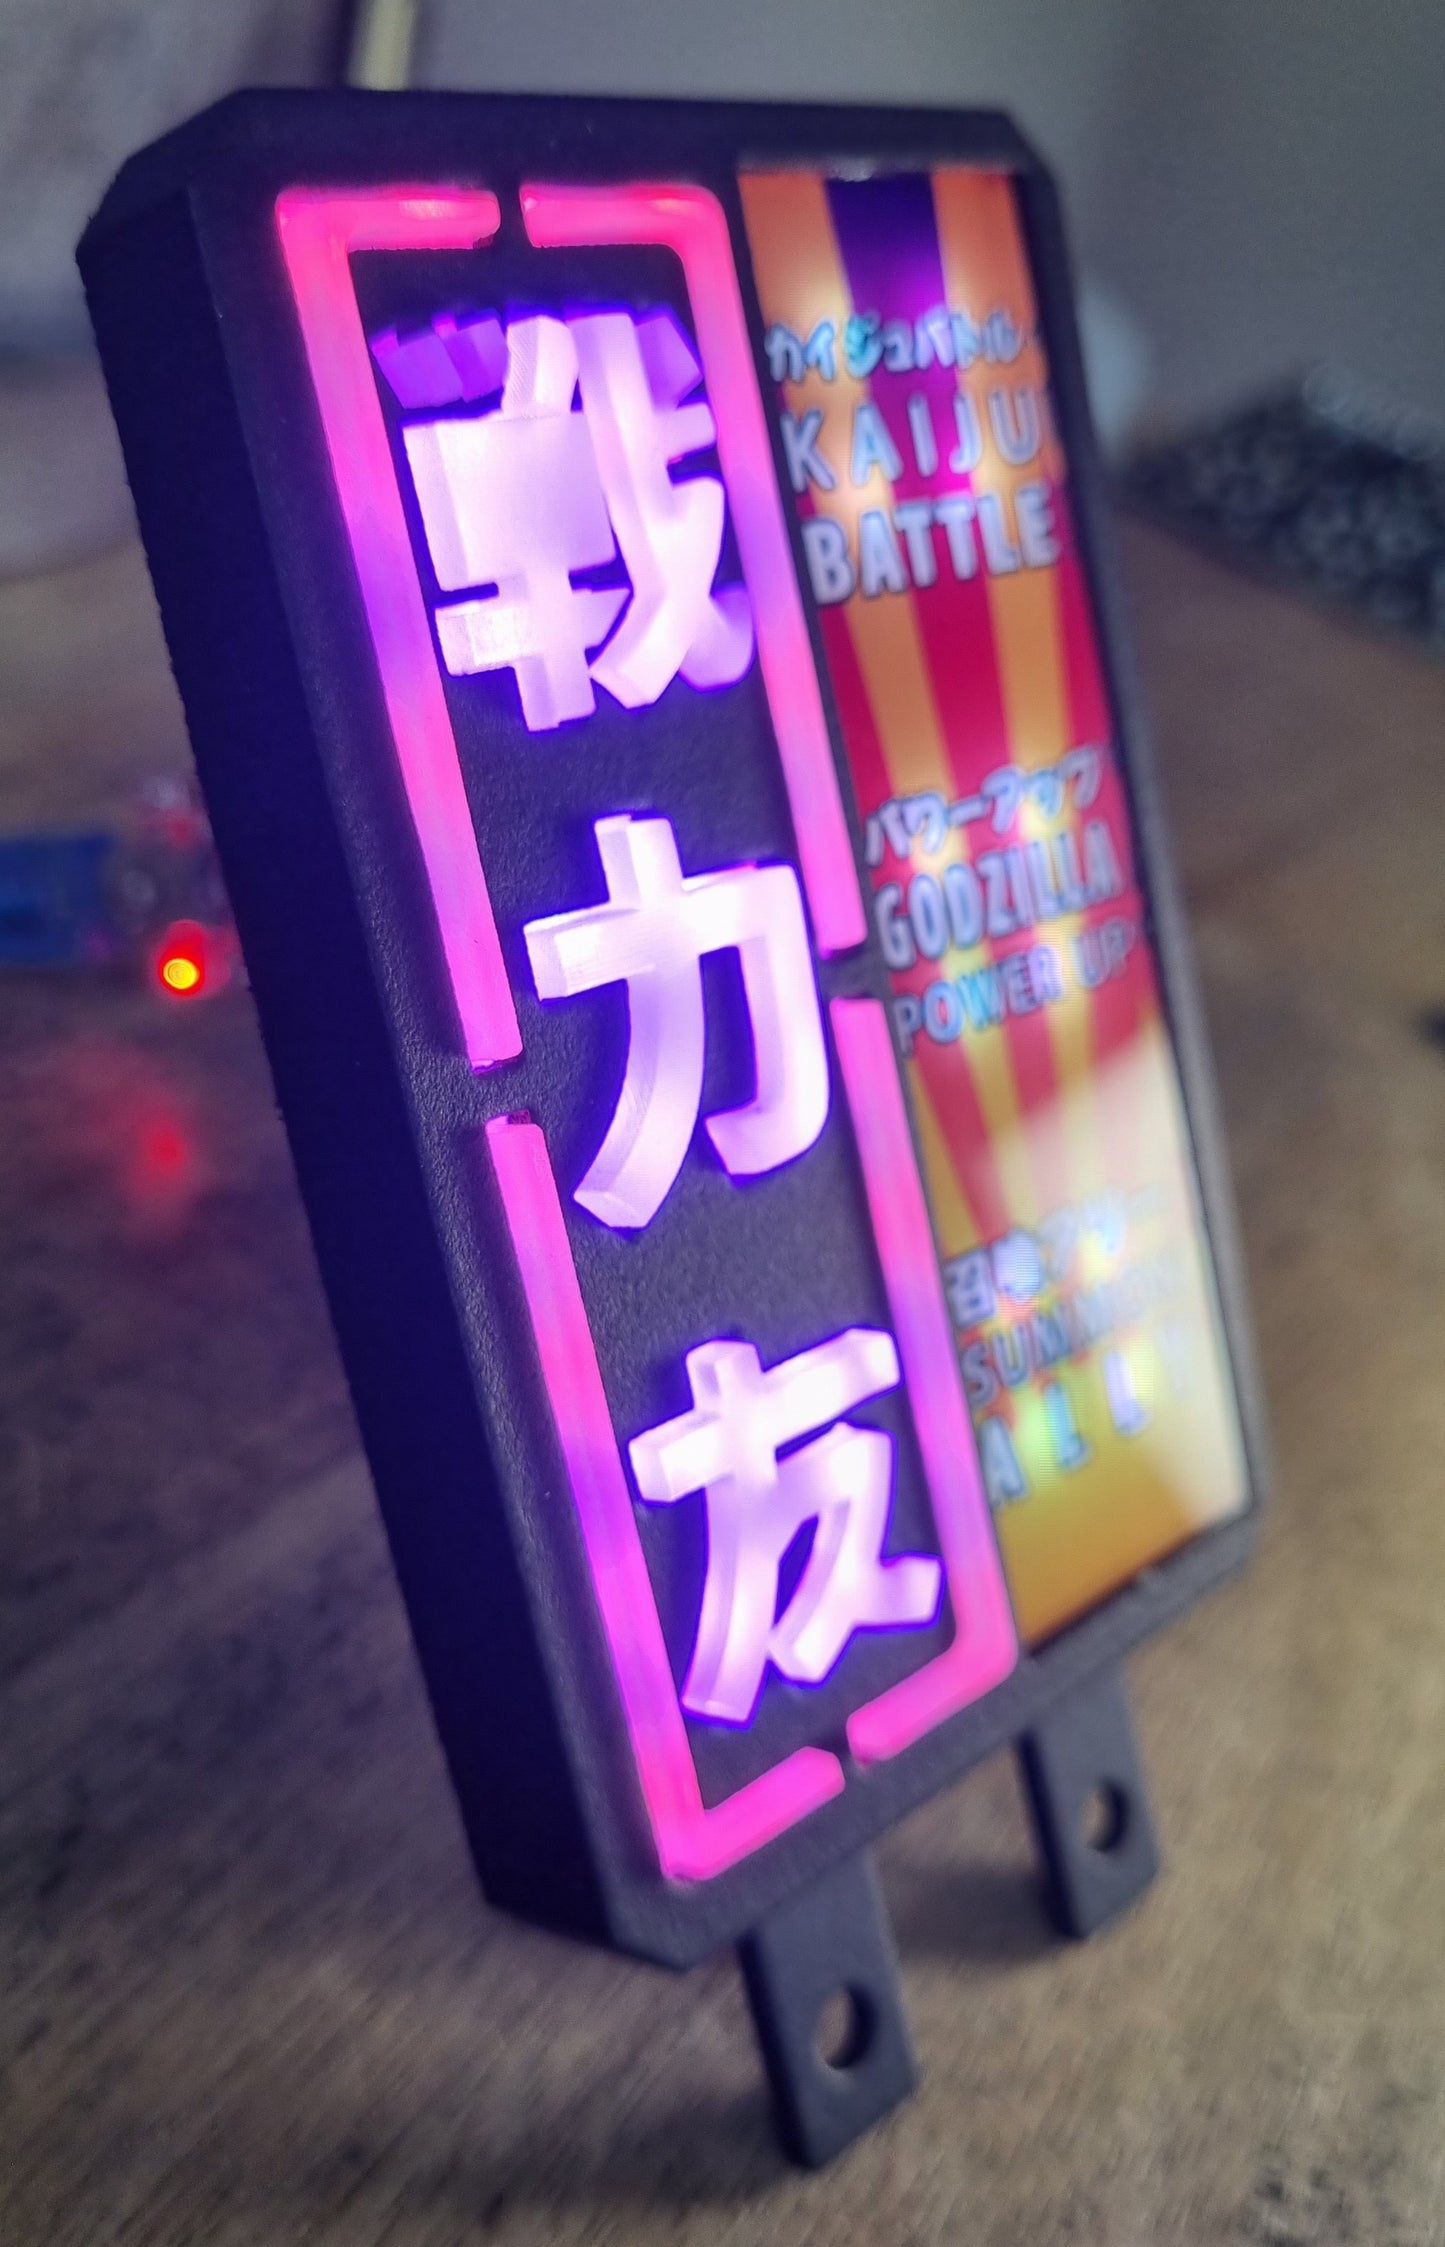 Godzilla "Tokyo Neon" sign mod